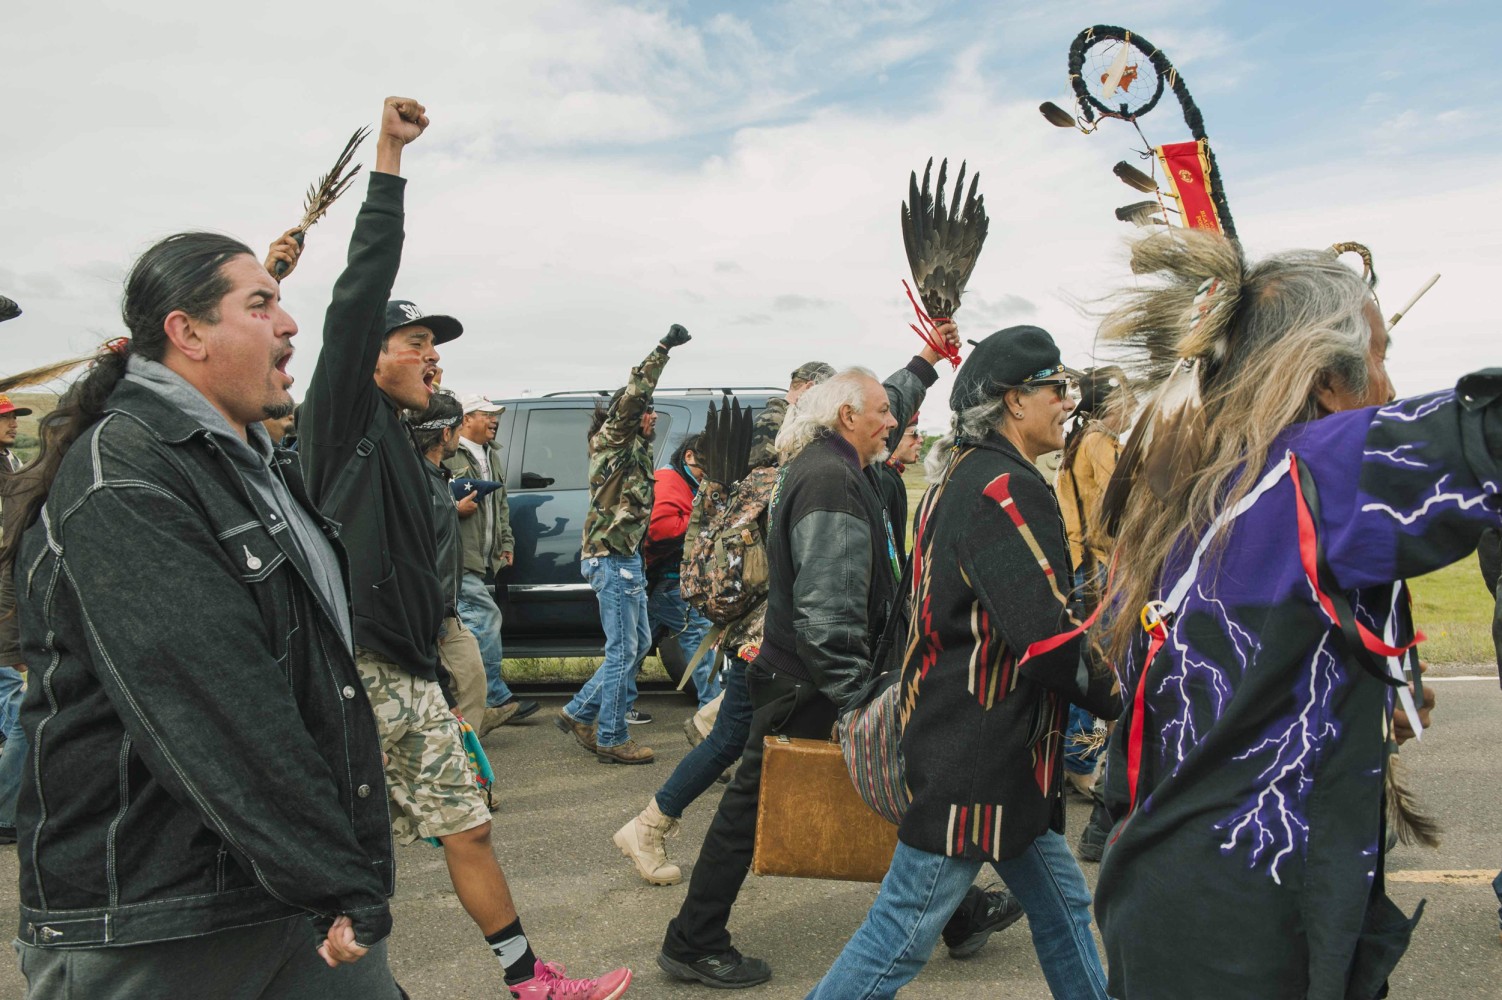 Dakota Standing Rock Sioux Access Pipeline